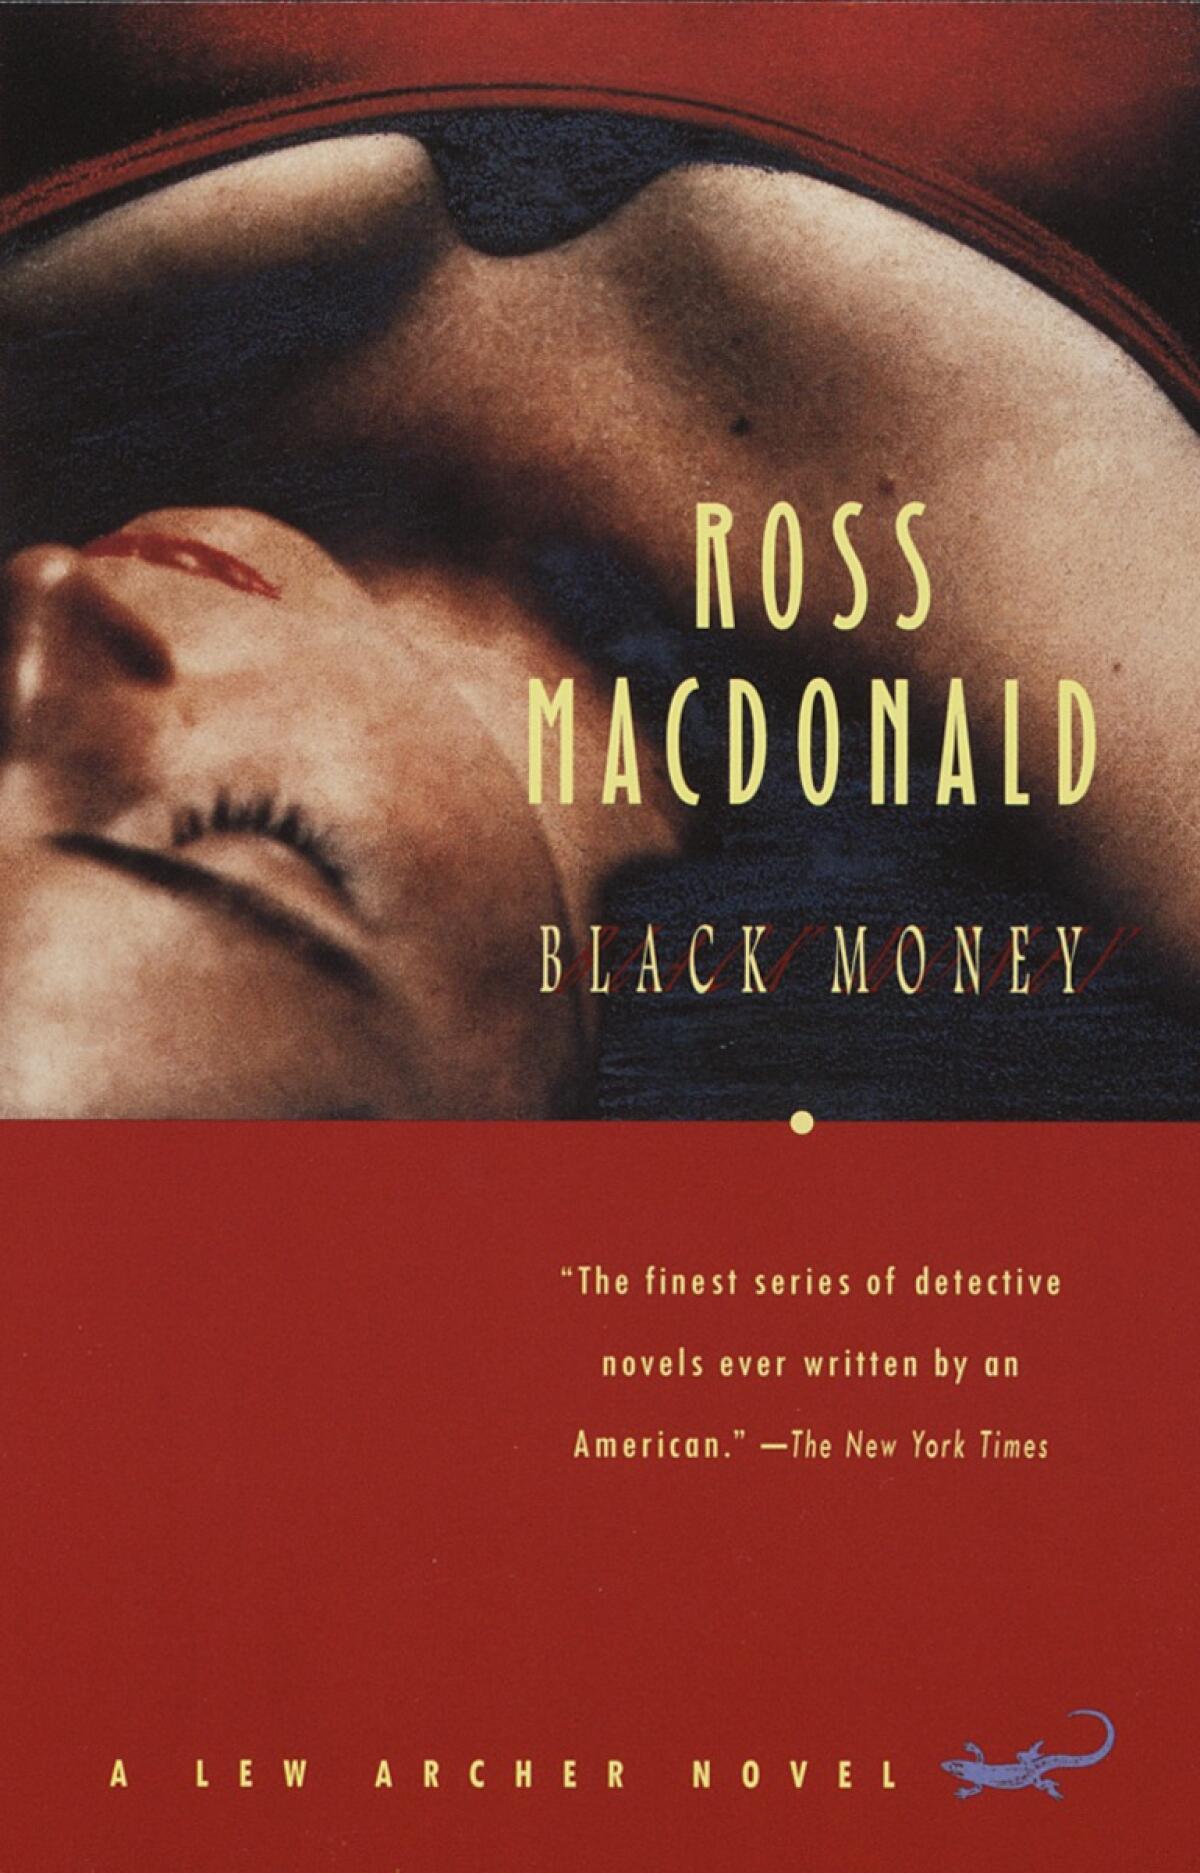 "Black Money" by Ross Macdonald